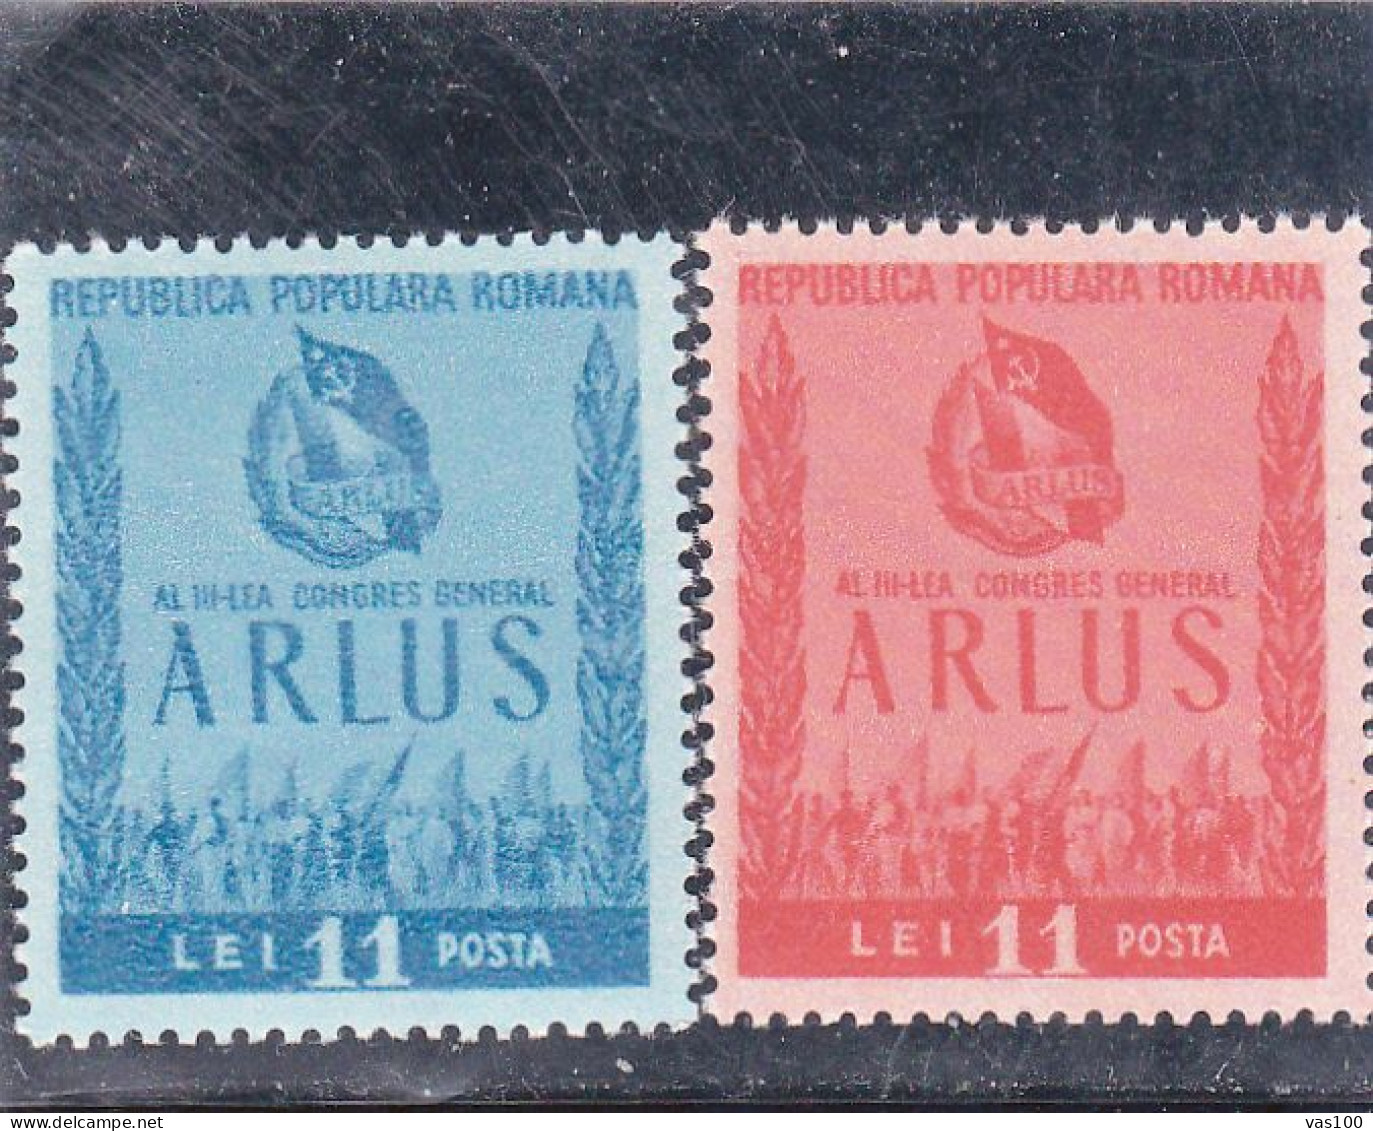 ARLUS CONGRESS,1950,MI.1240/41, MNH**, ROMANIA. - Neufs